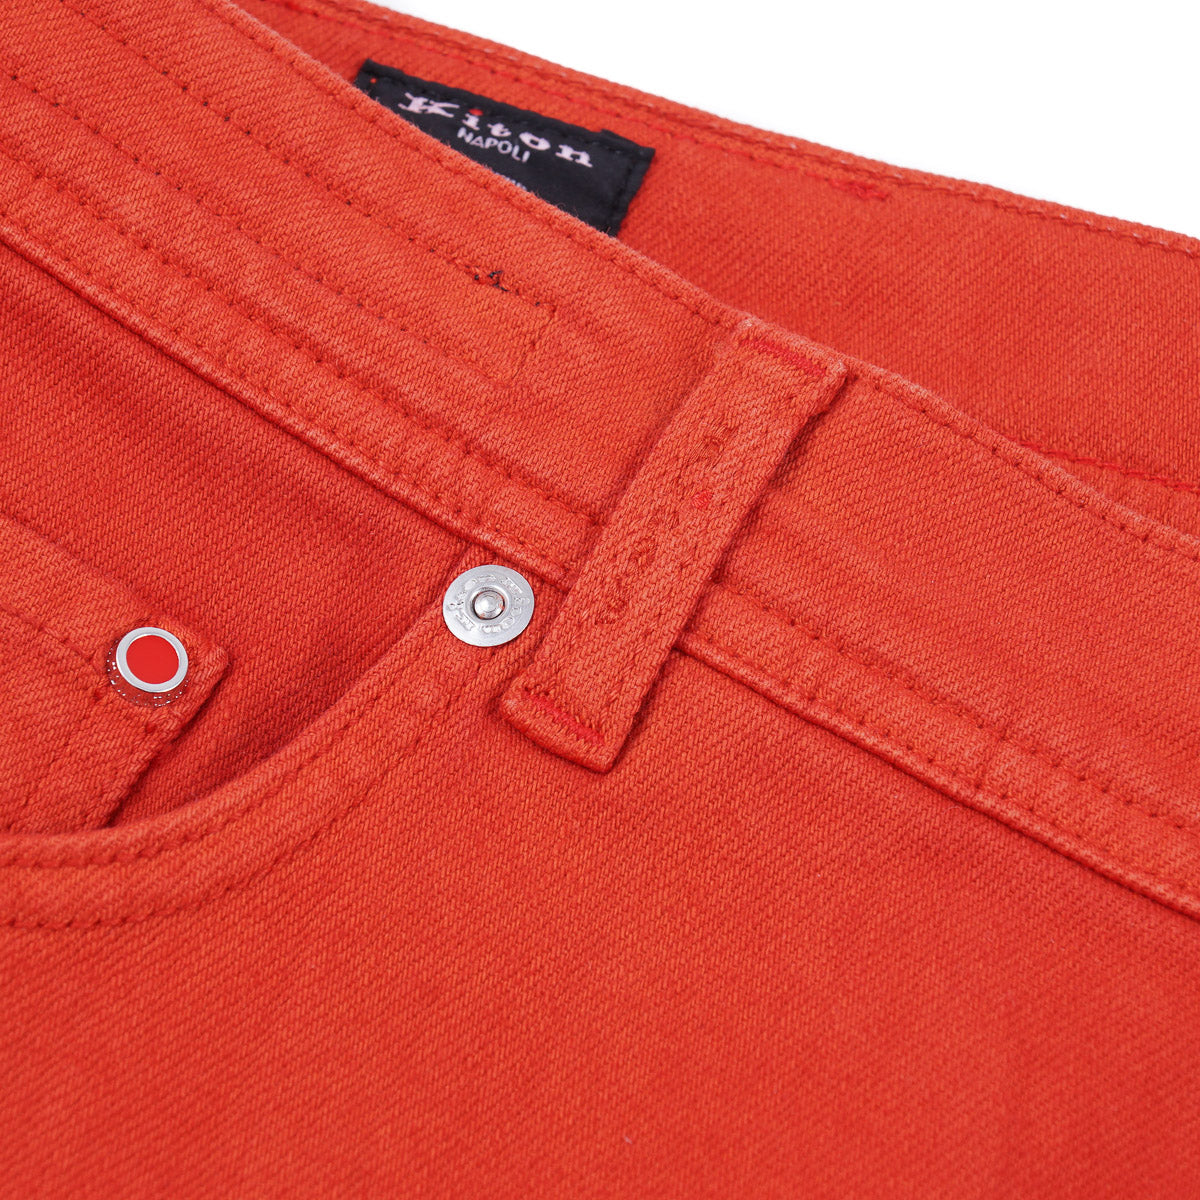 Kiton Red Stretch Denim Jeans - Top Shelf Apparel